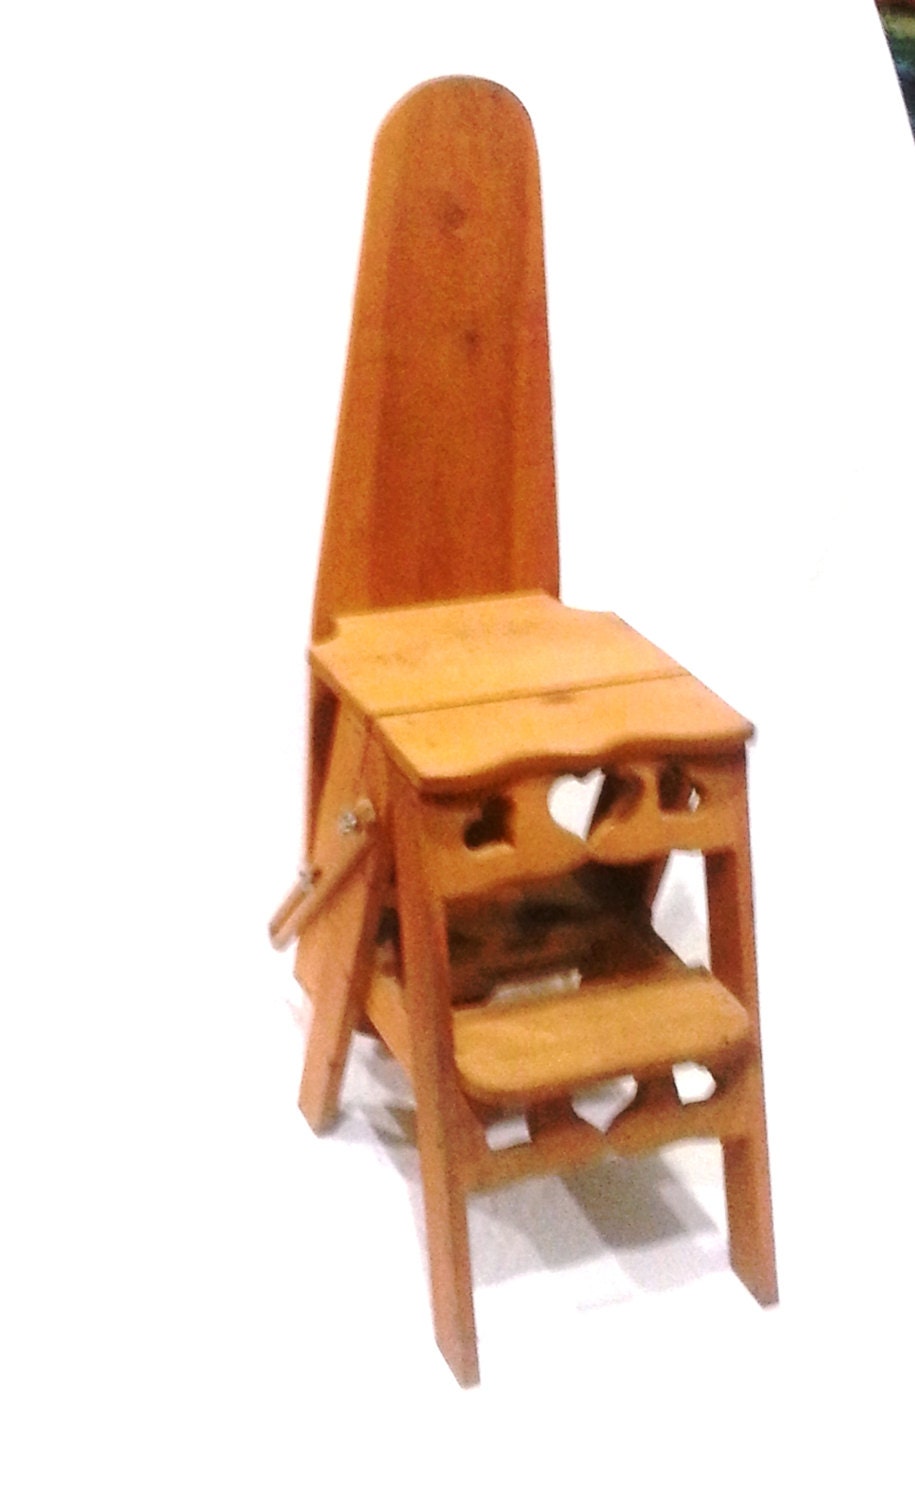 Ironing Board High Chair Step Stool Ladder Shelf Furniture